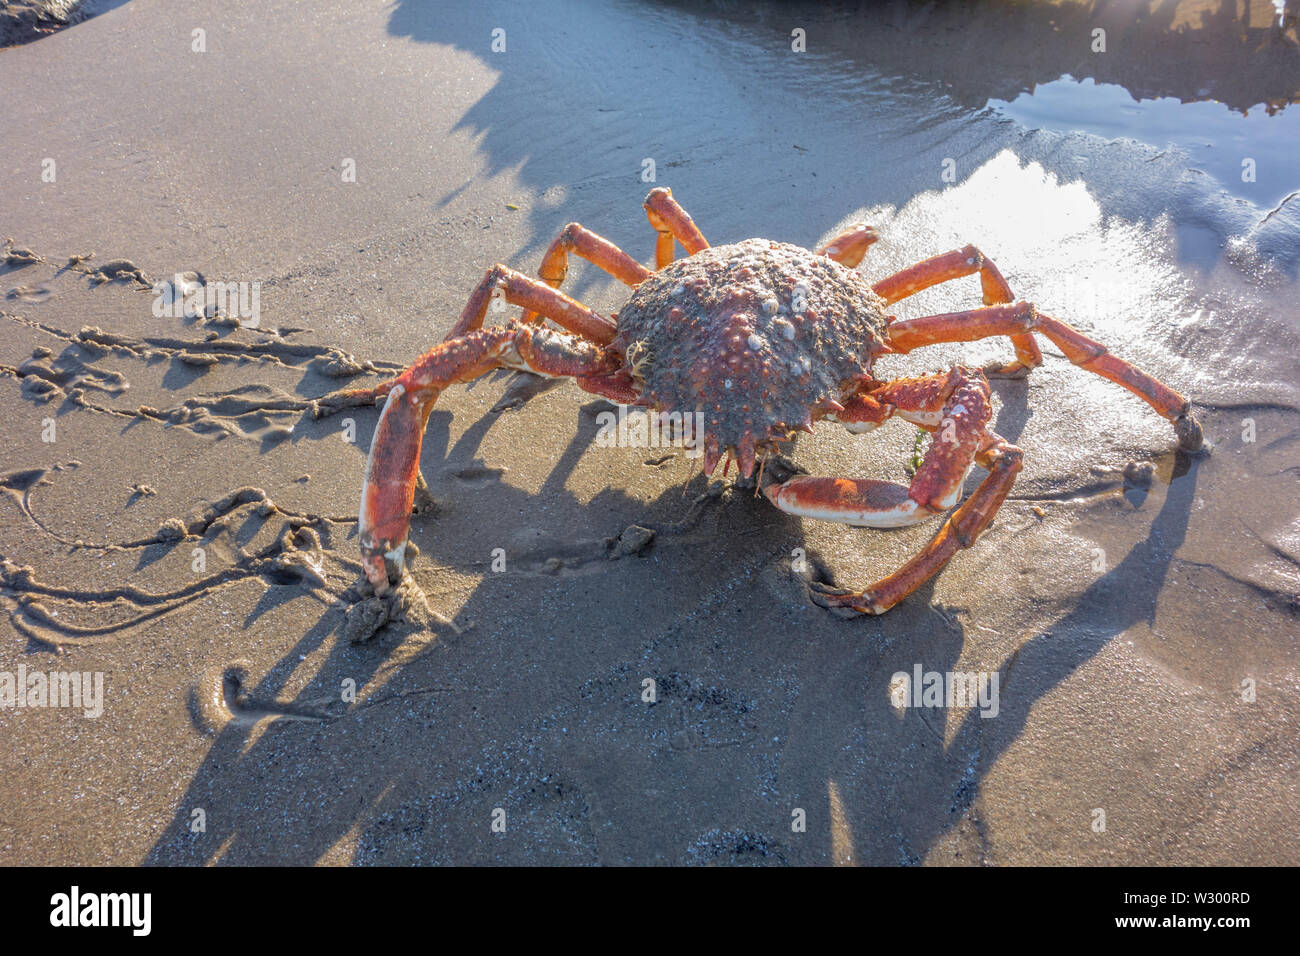 Spider crabs (Maja brachydactyla) on Yayslas beach Borth Ceredigion, Mid Wales, UK June 2019. Stock Photo